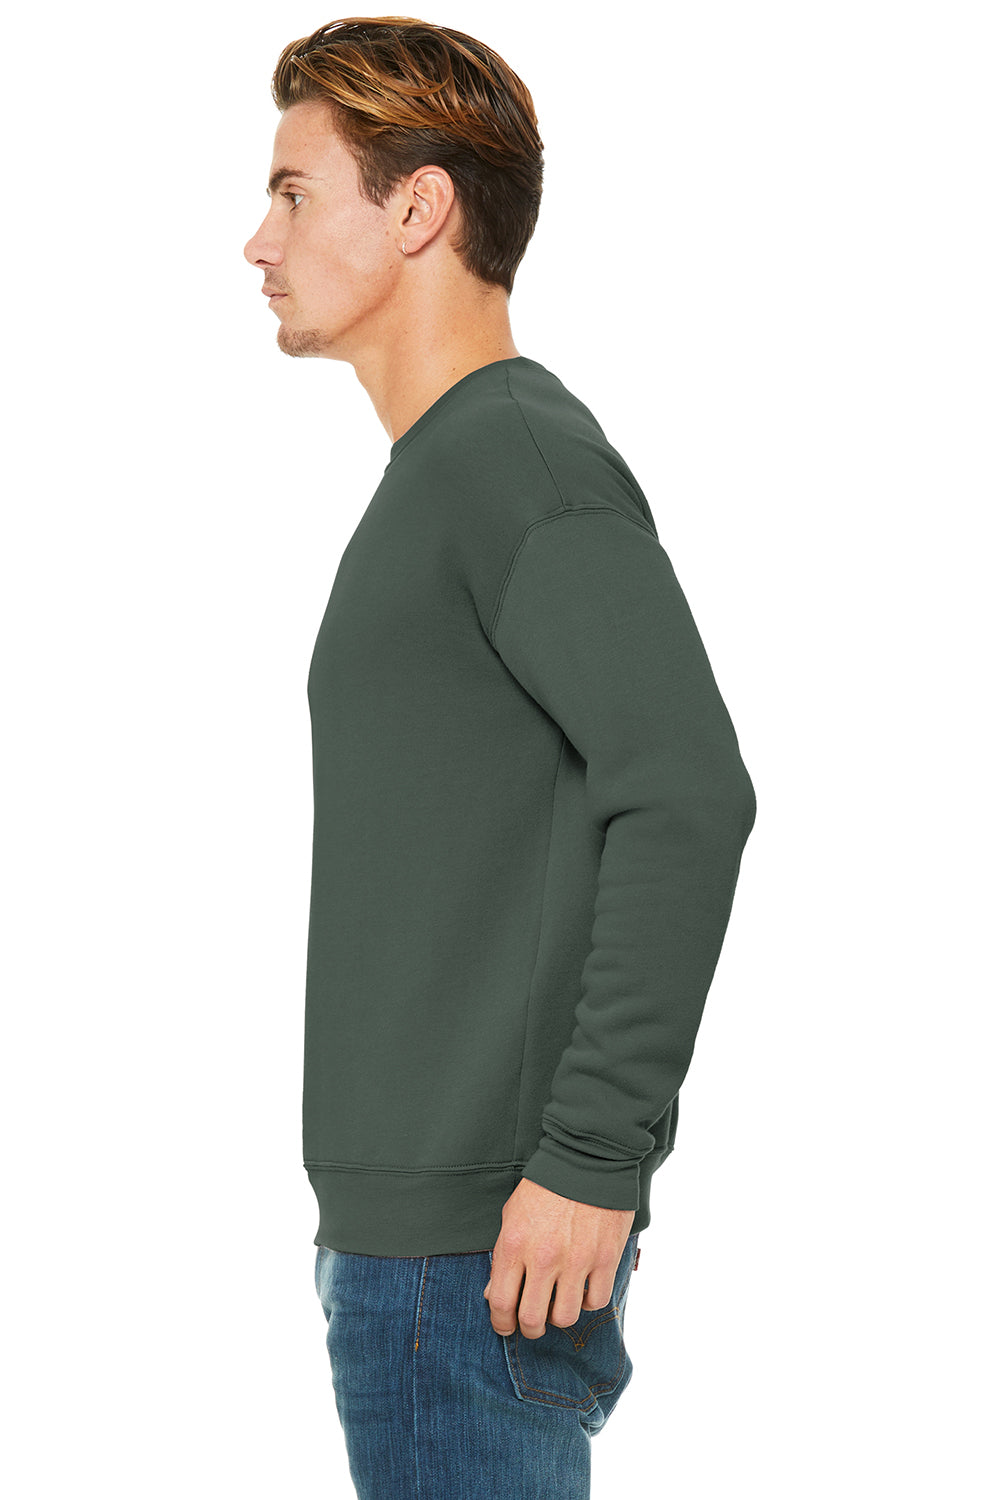 Bella + Canvas BC3945/3945 Mens Fleece Crewneck Sweatshirt Military Green Model Side